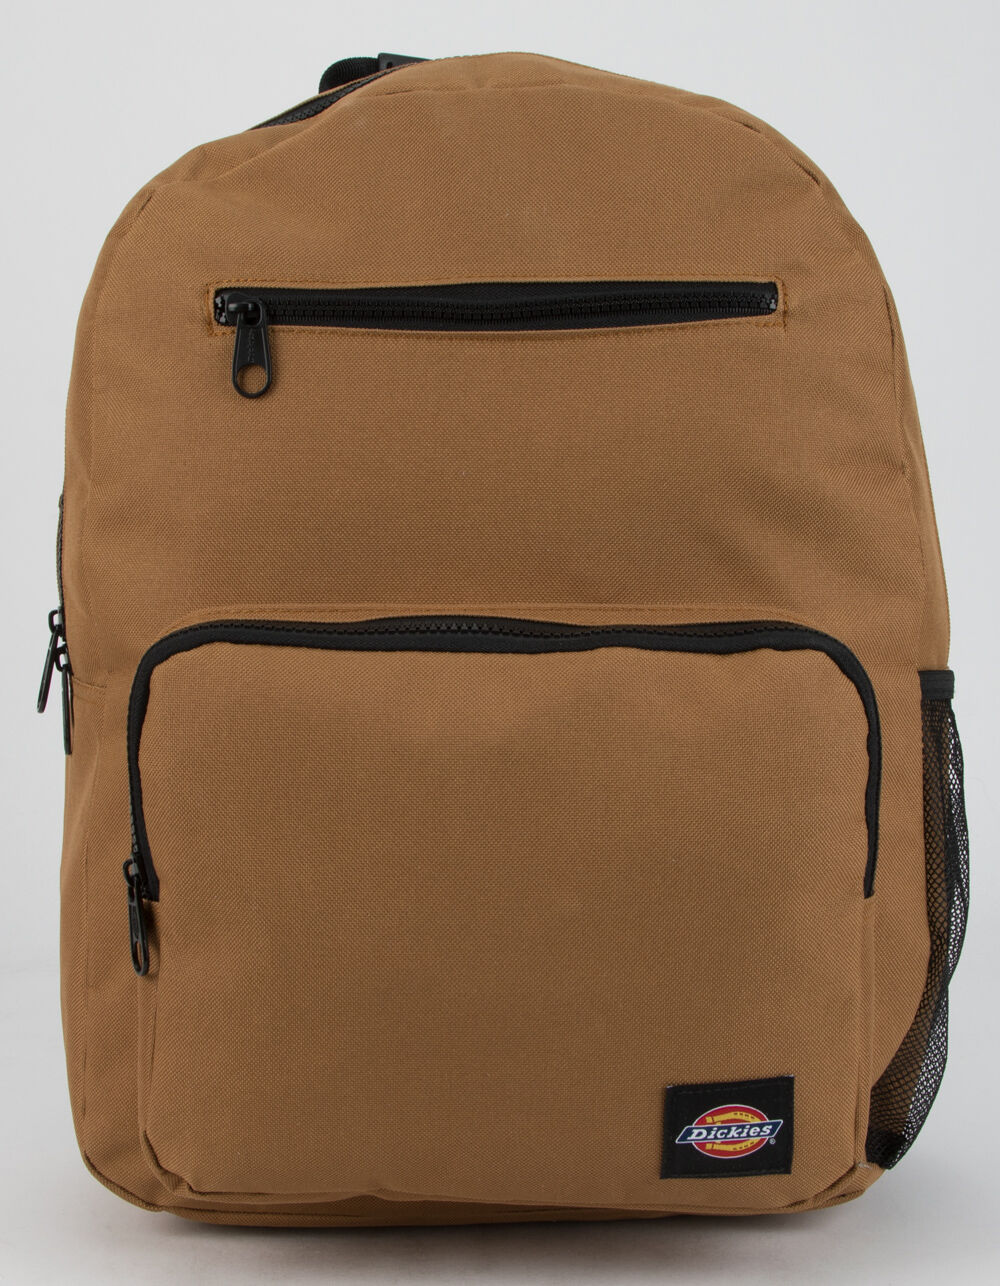 Multi Sac Backpack Brown - $15 (70% Off Retail) - From Deja